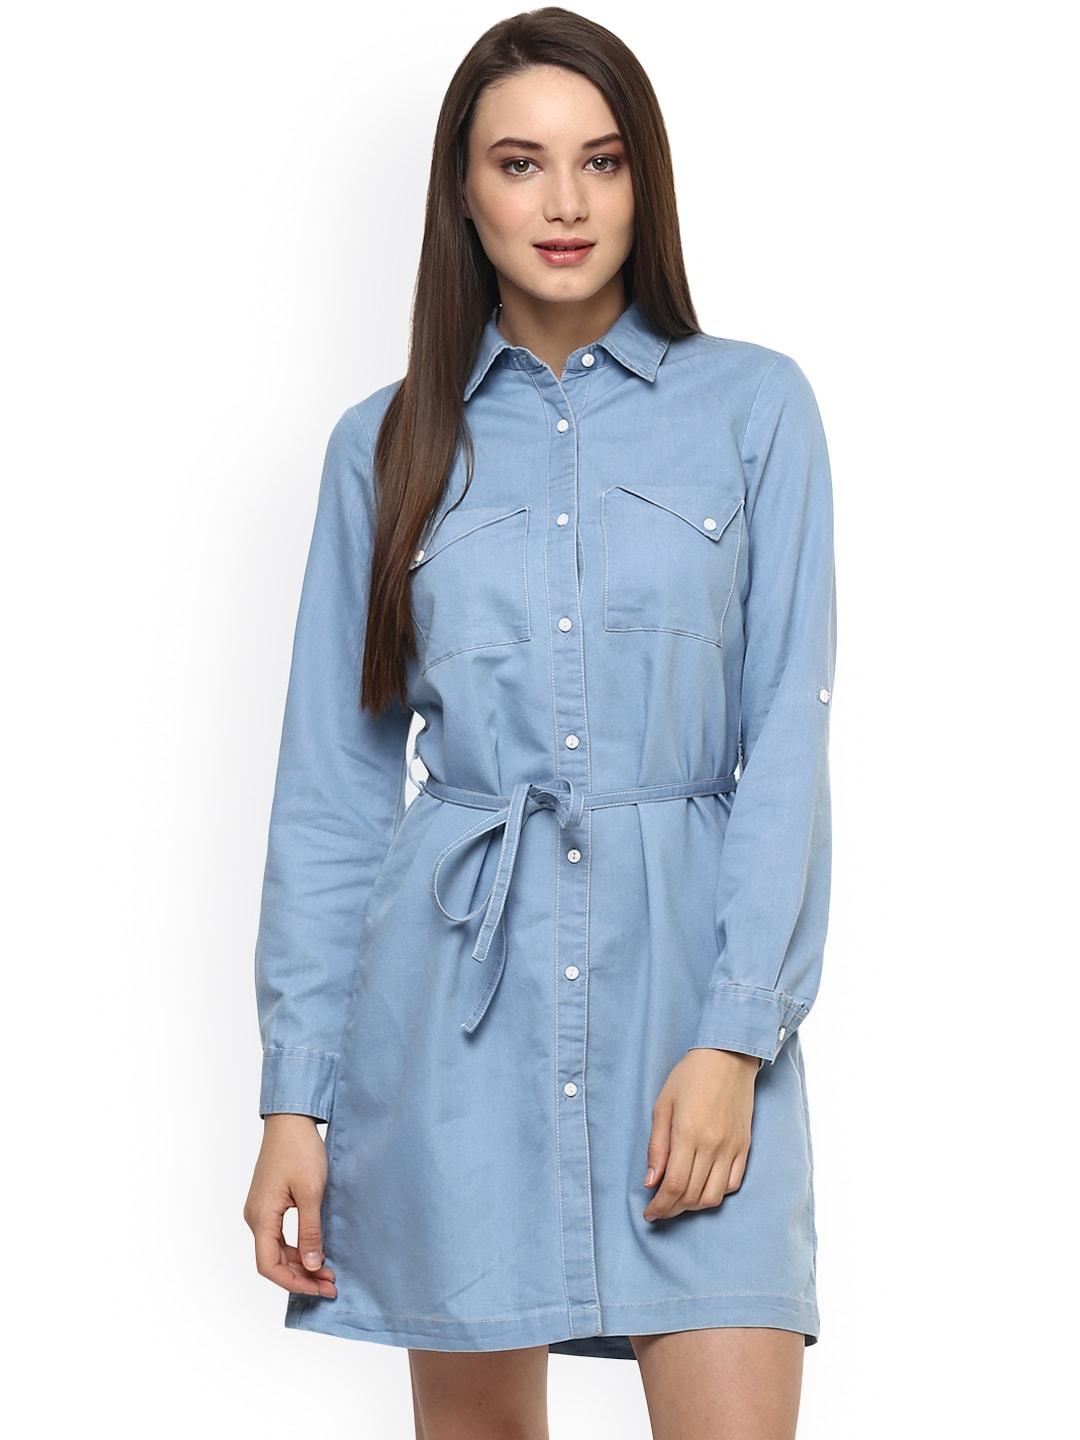 stylestone-women-blue-denim-shirt-dress